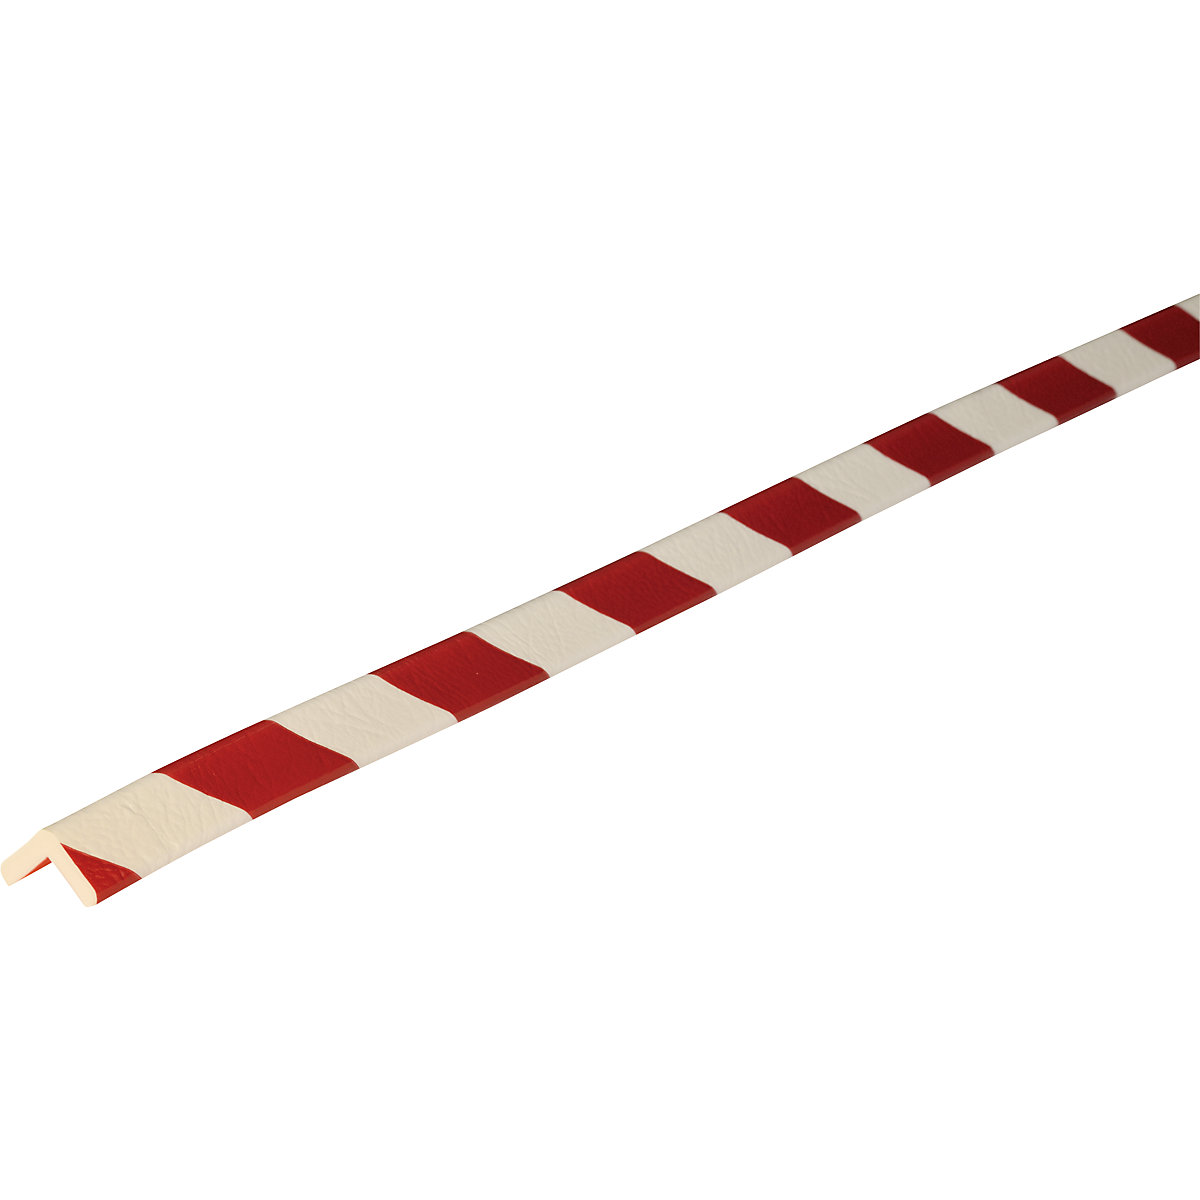 Knuffi®-hoekbescherming – SHG, type E, stuk van 1 m, rood/wit-26